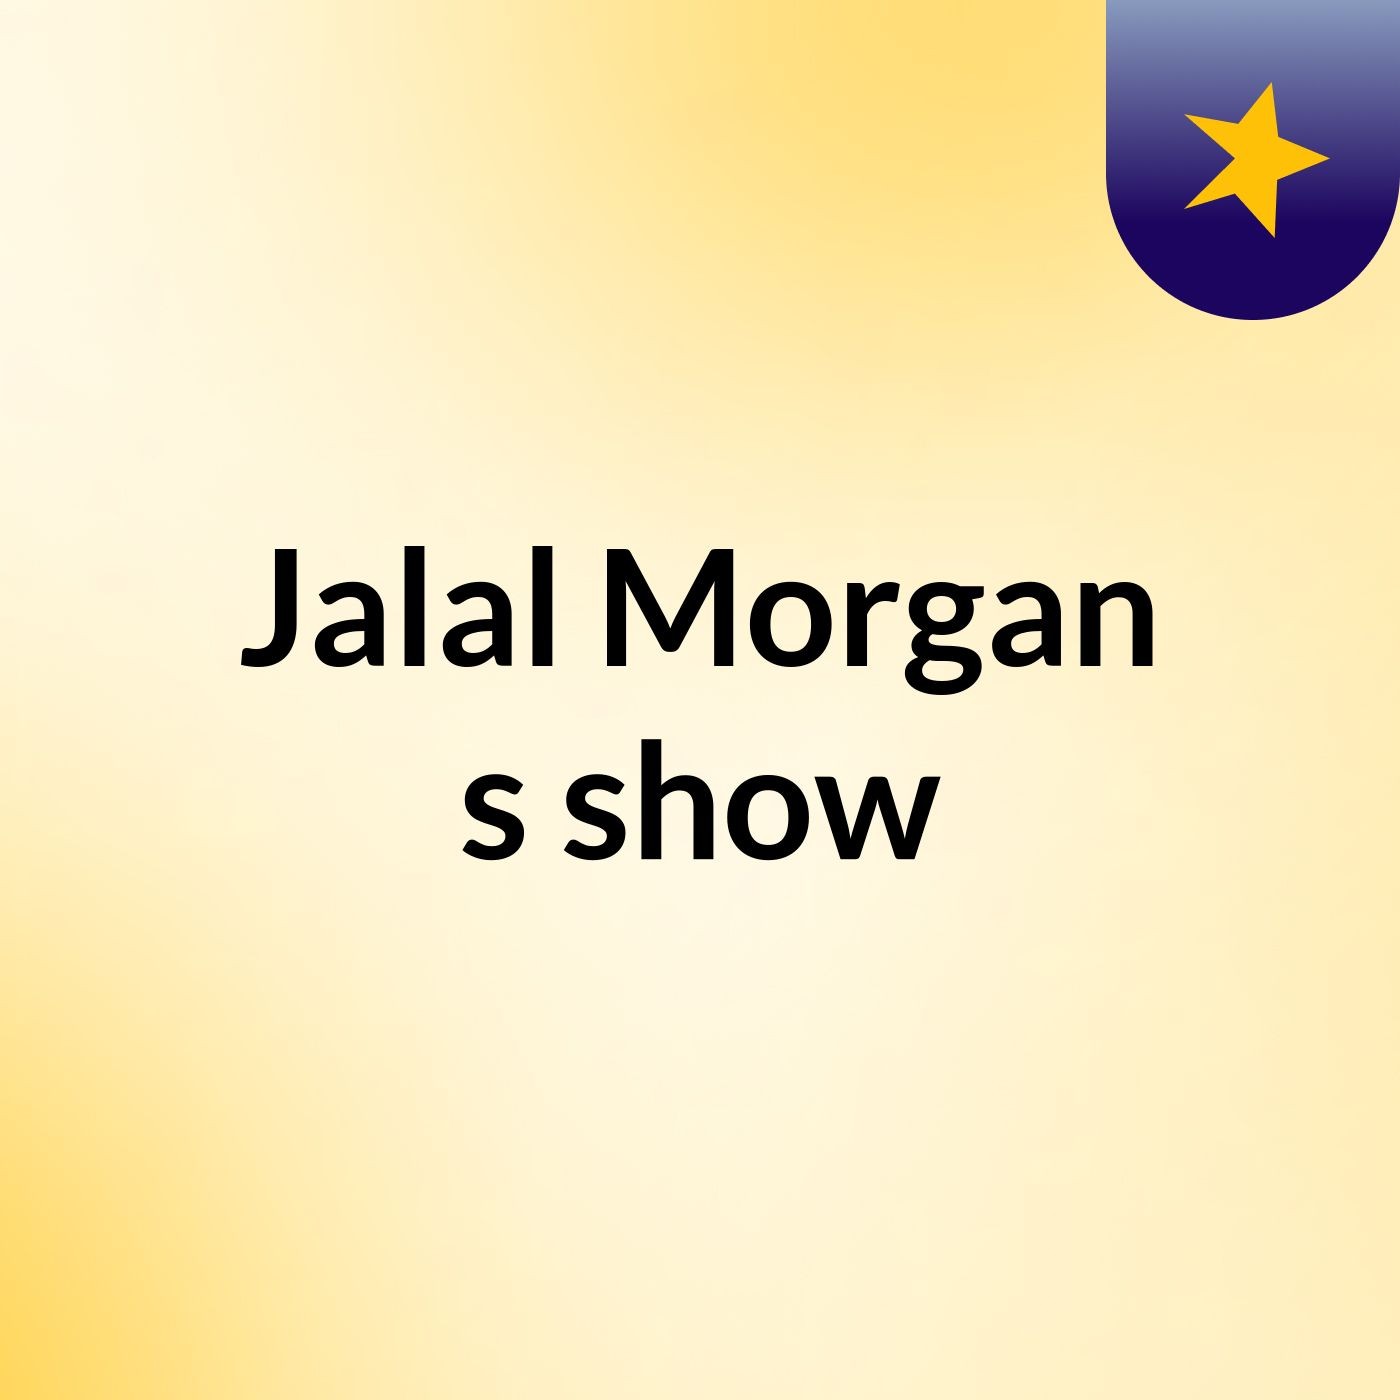 Jalal Morgan's show